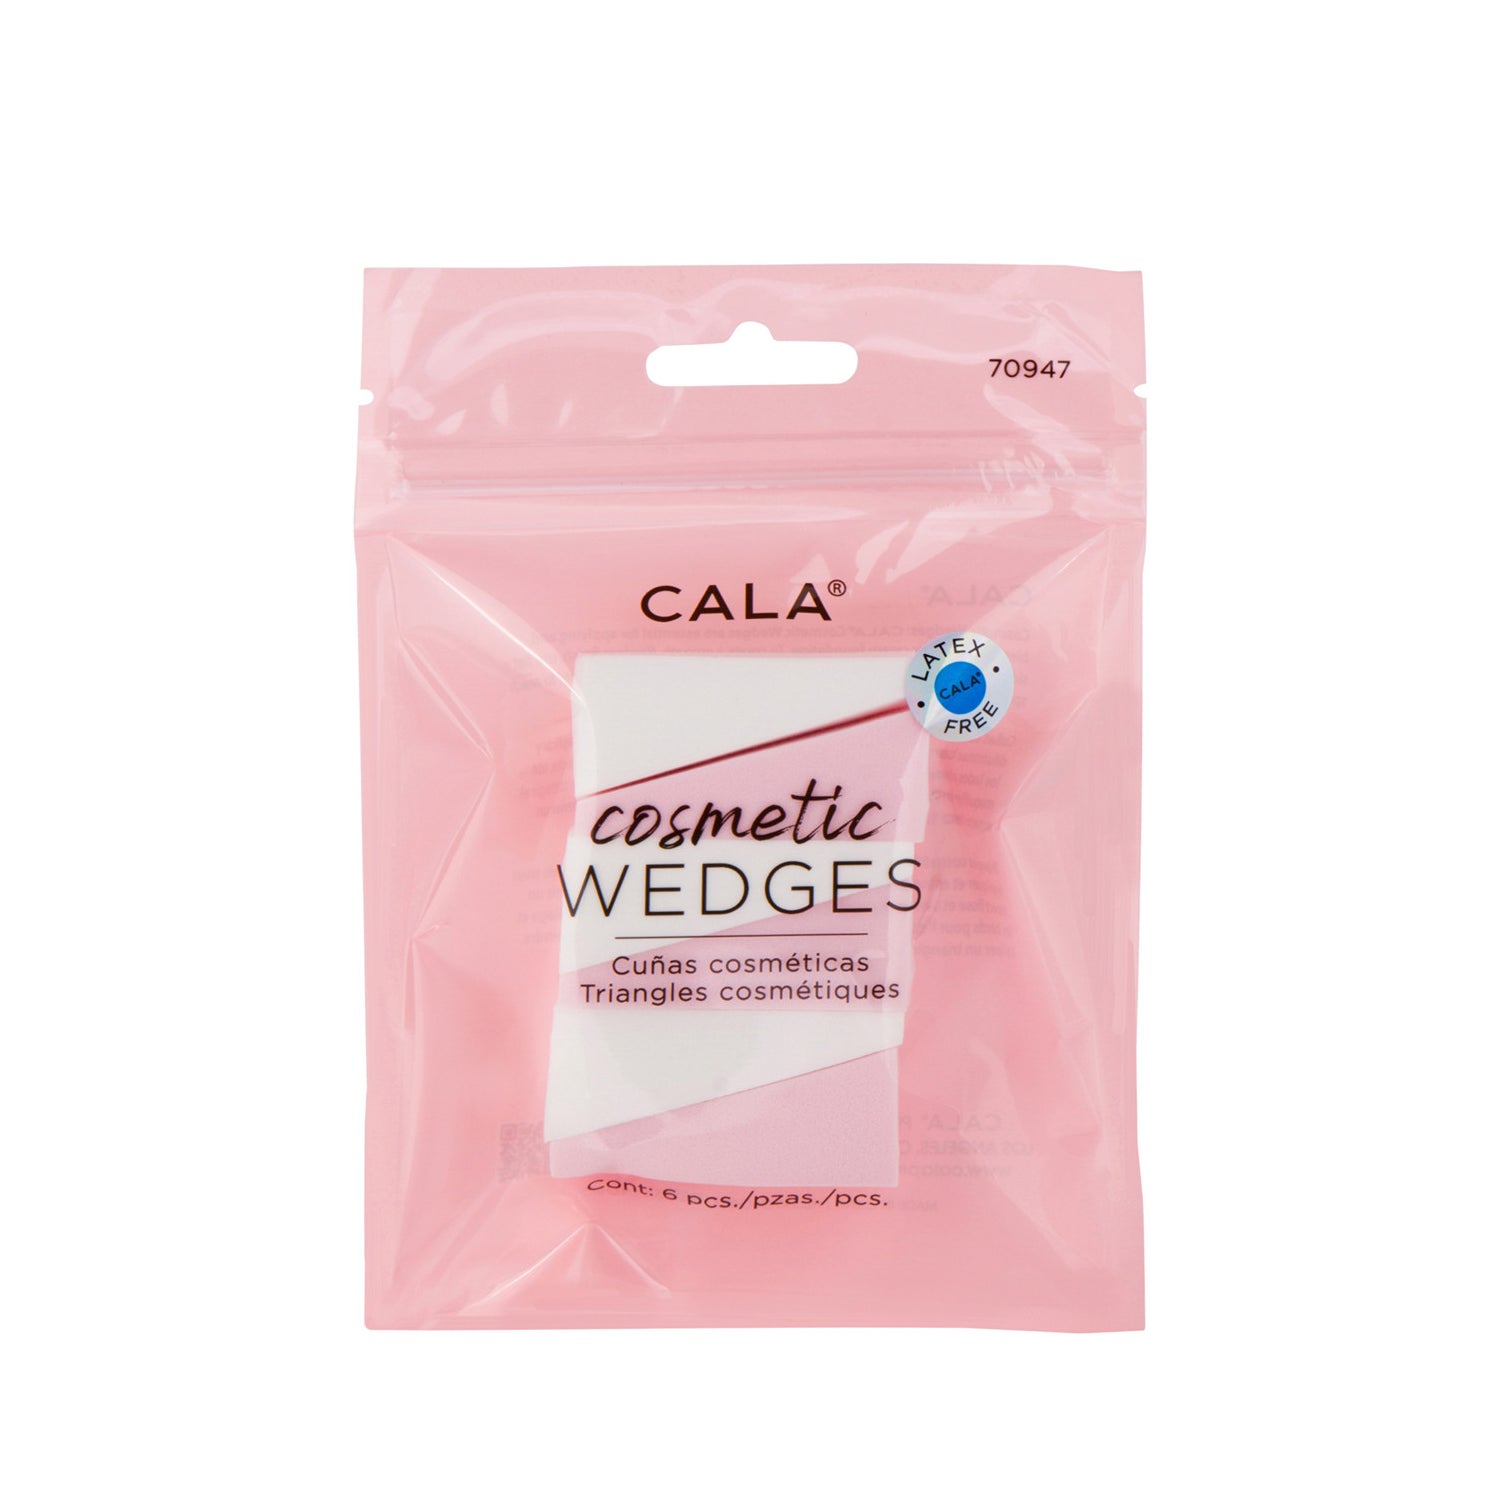 Cala Makeup Wedges Sponges Non Latex 2 ct